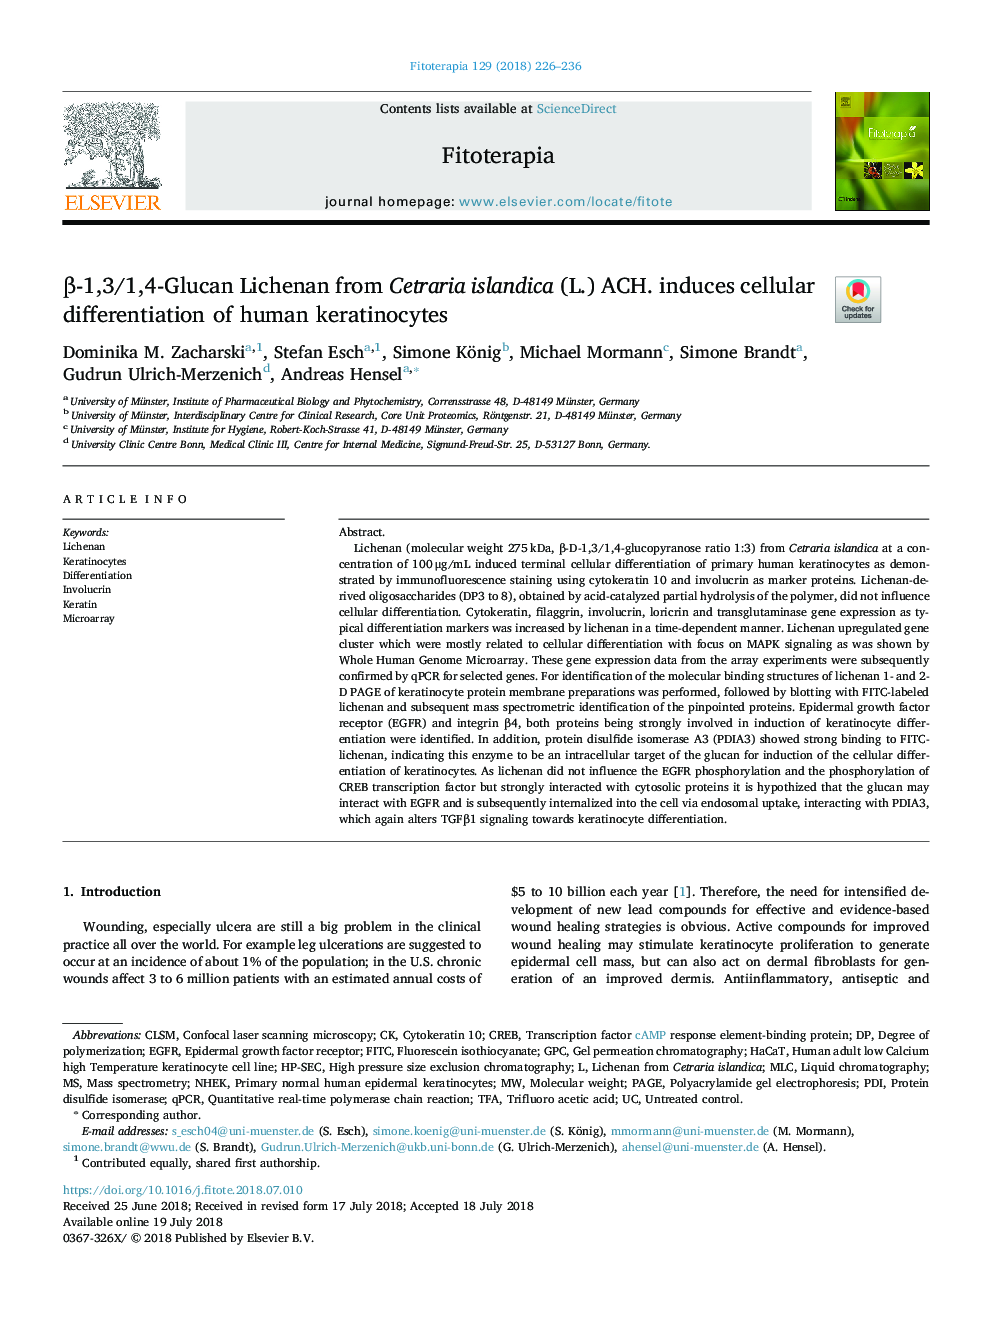 Î²-1,3/1,4-Glucan Lichenan from Cetraria islandica (L.) ACH. induces cellular differentiation of human keratinocytes